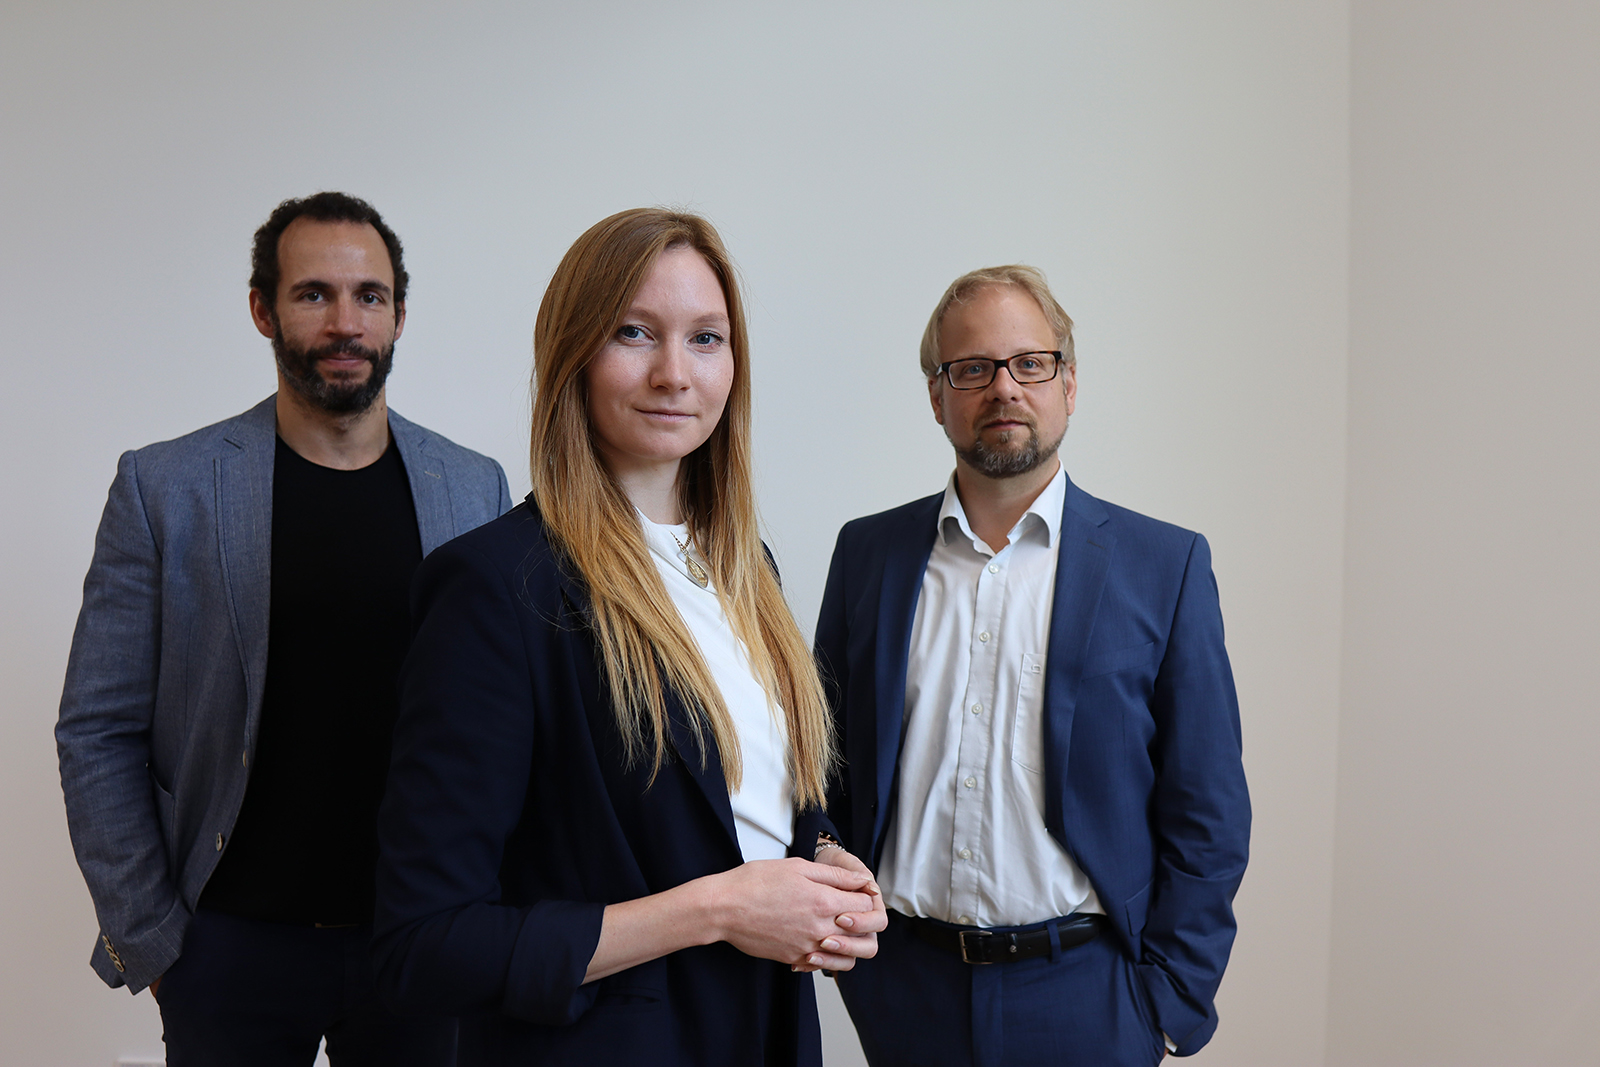 Das Gründerteam der Fraunhofer-Ausgründung TigerShark Science. Von links nach rechts: Dr. Dieter Groneberg, Amelie Reigl, Dr. Florian Groeber-Becker.